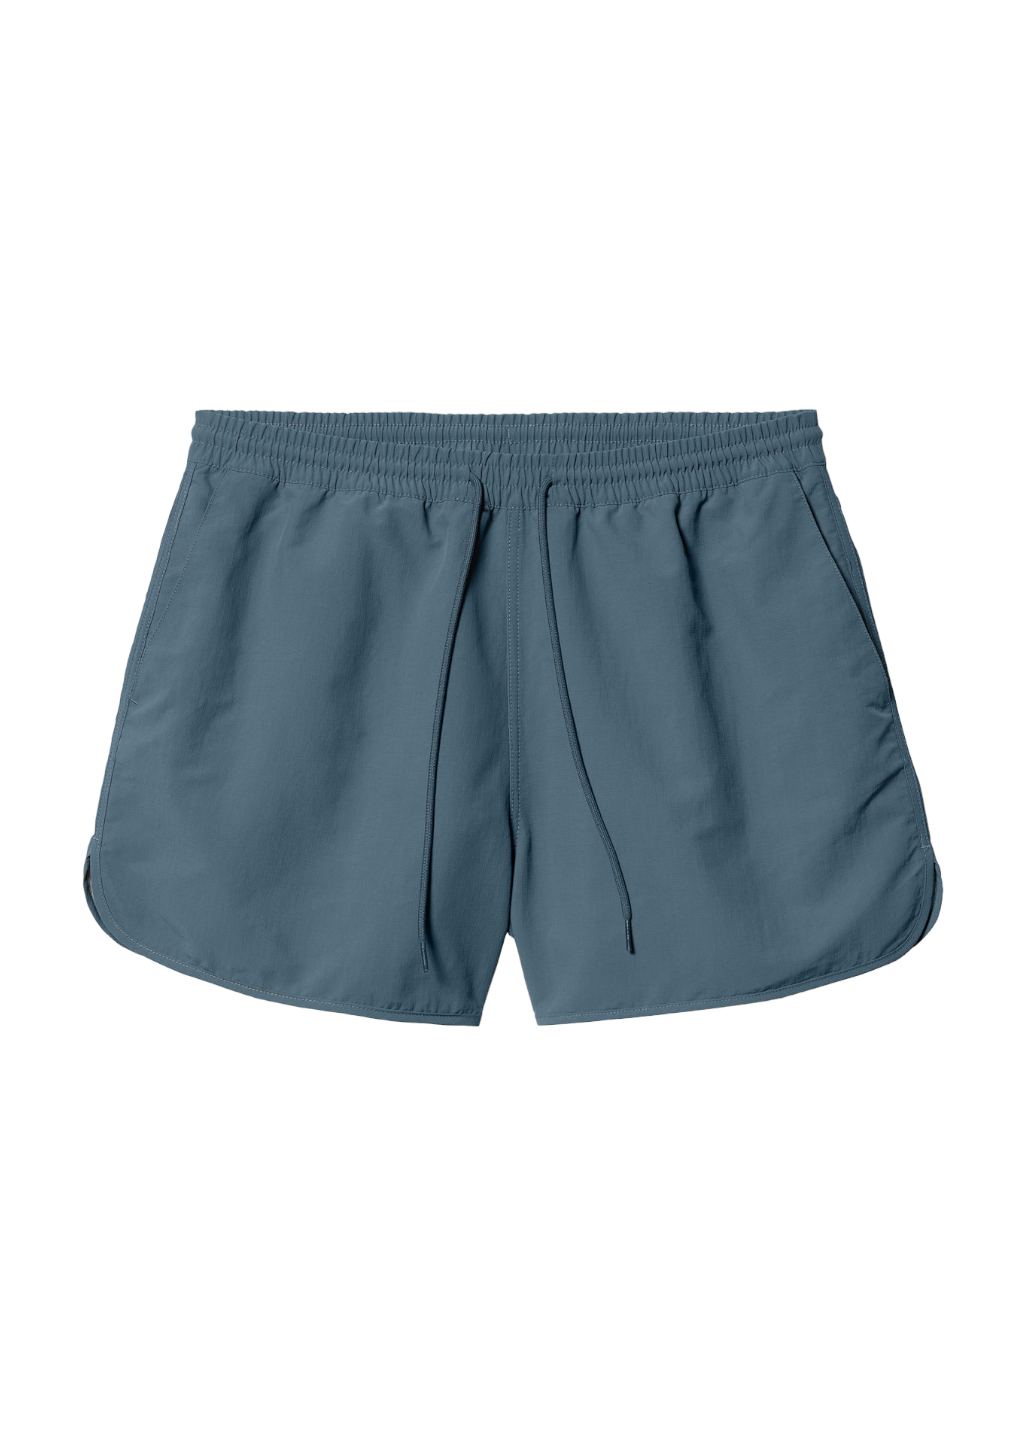 sportscene - Redbat Men's Stay True Print Shorts - R369: http